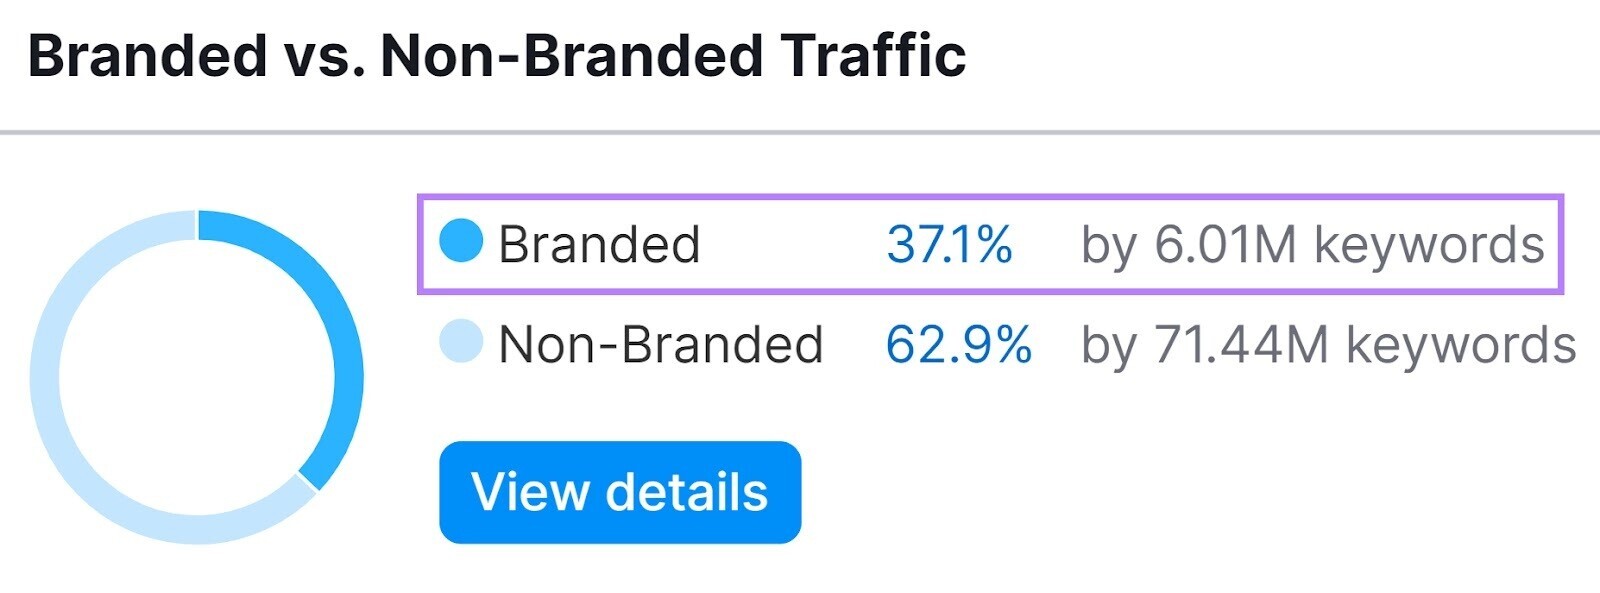 "Branded vs Non-Branded Traffic" section of the report for Reddit